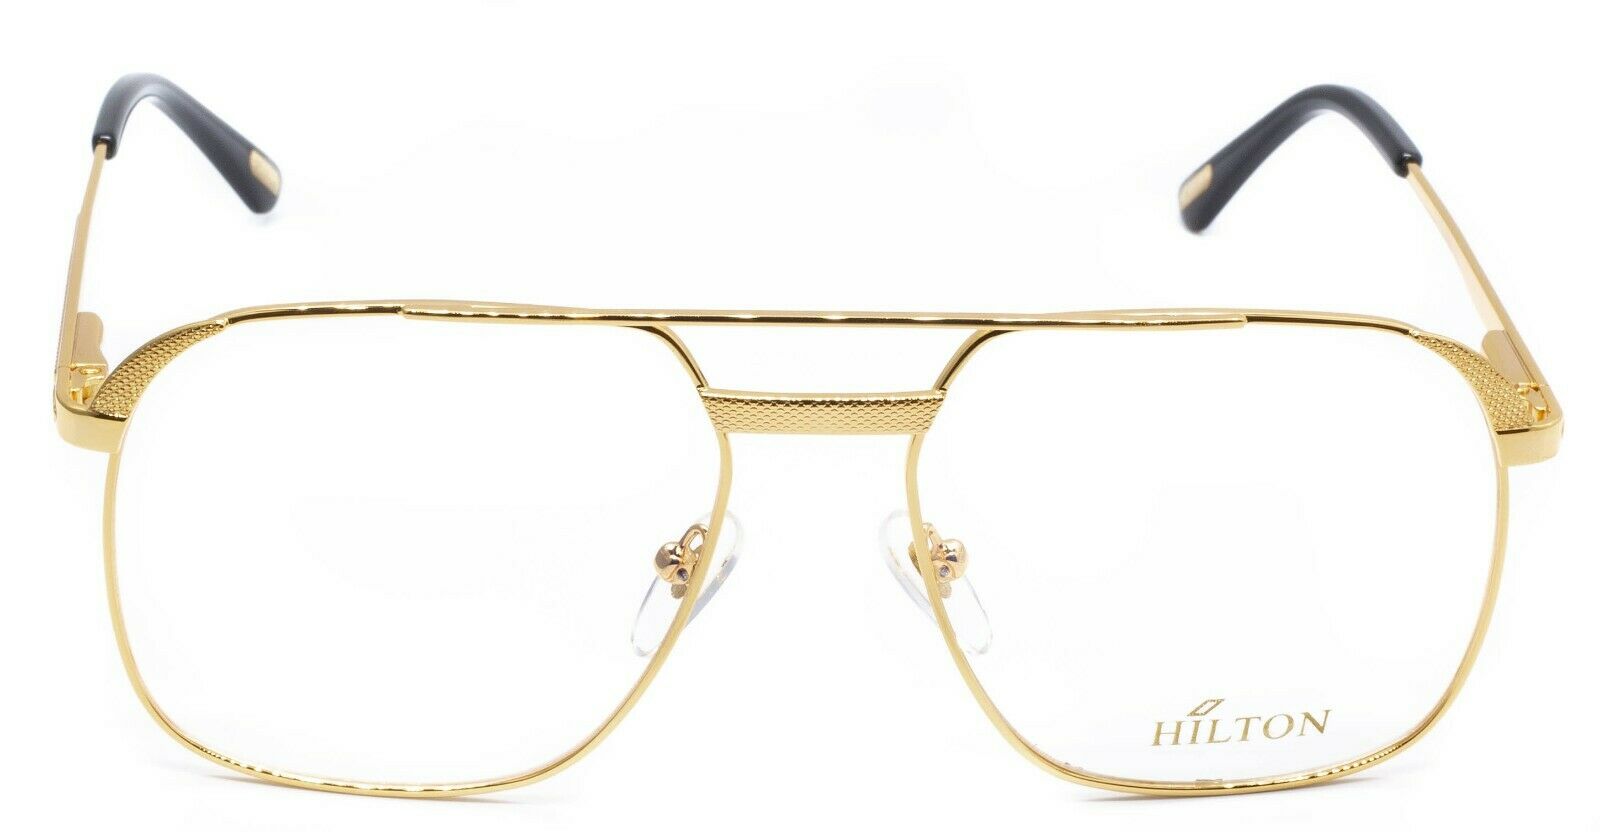 Hilton Eyewear Vintage Class 010 995 24KT 58x18mm FRAMES RX Optical - New NOS